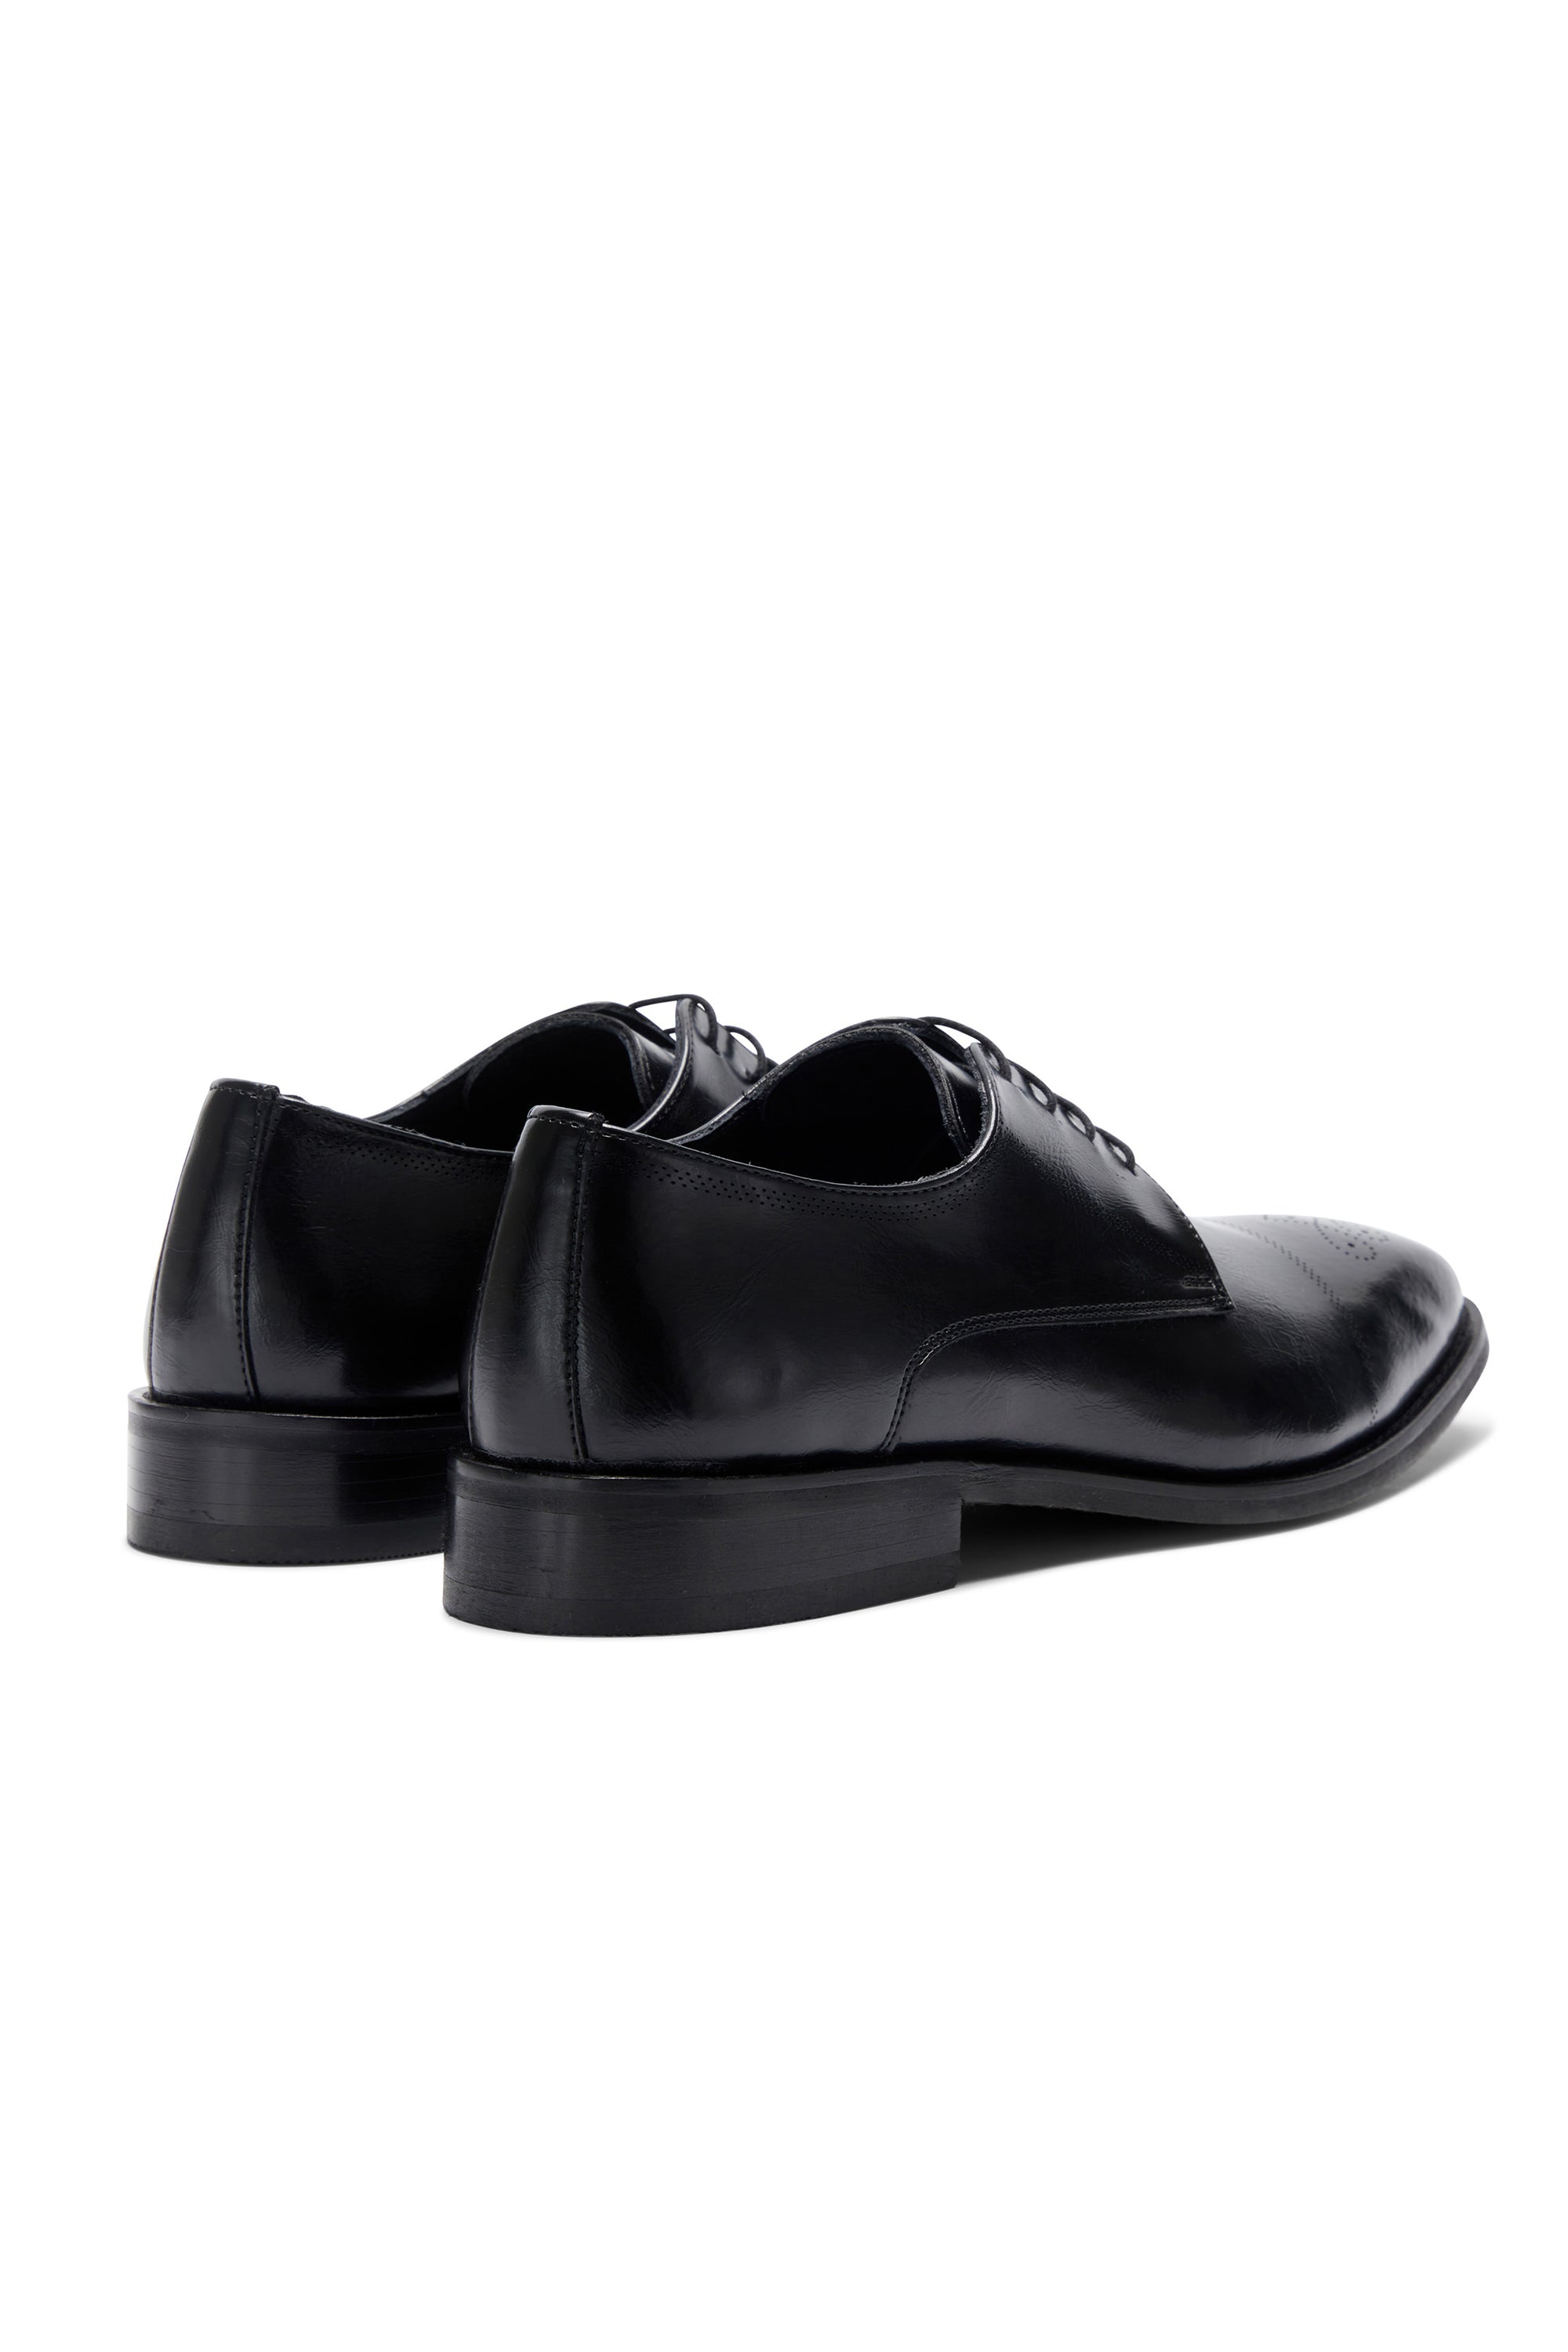 Louis Black Formal Mens Shoe-Back view